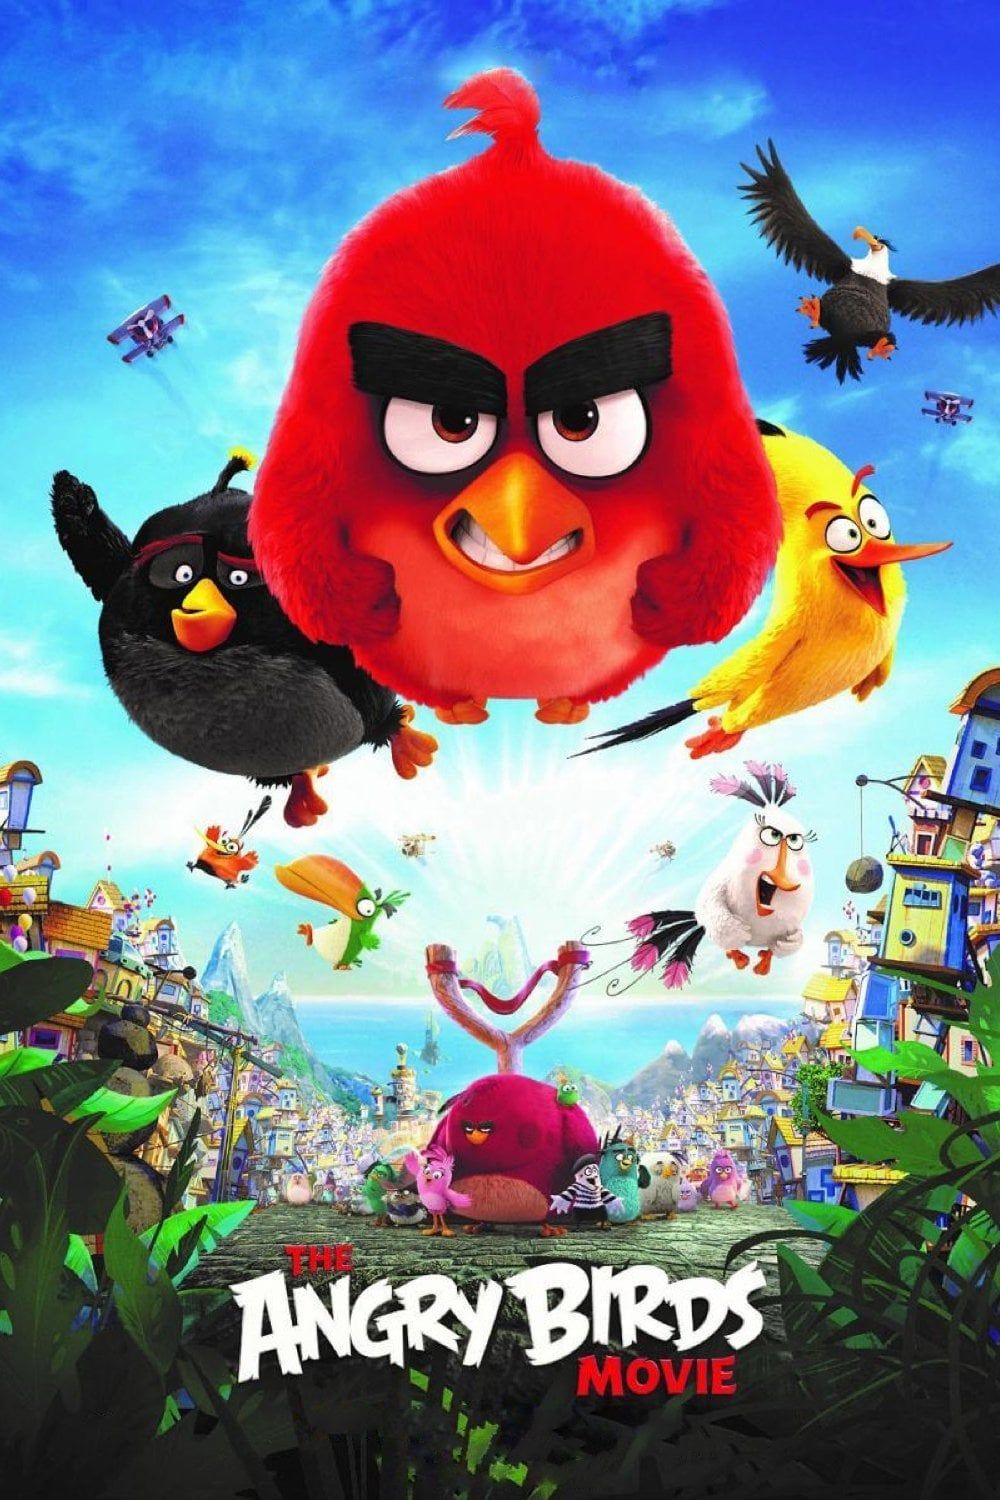 Angry Birds Porn 2016 - The Angry Birds Movie (2016) | MovieWeb